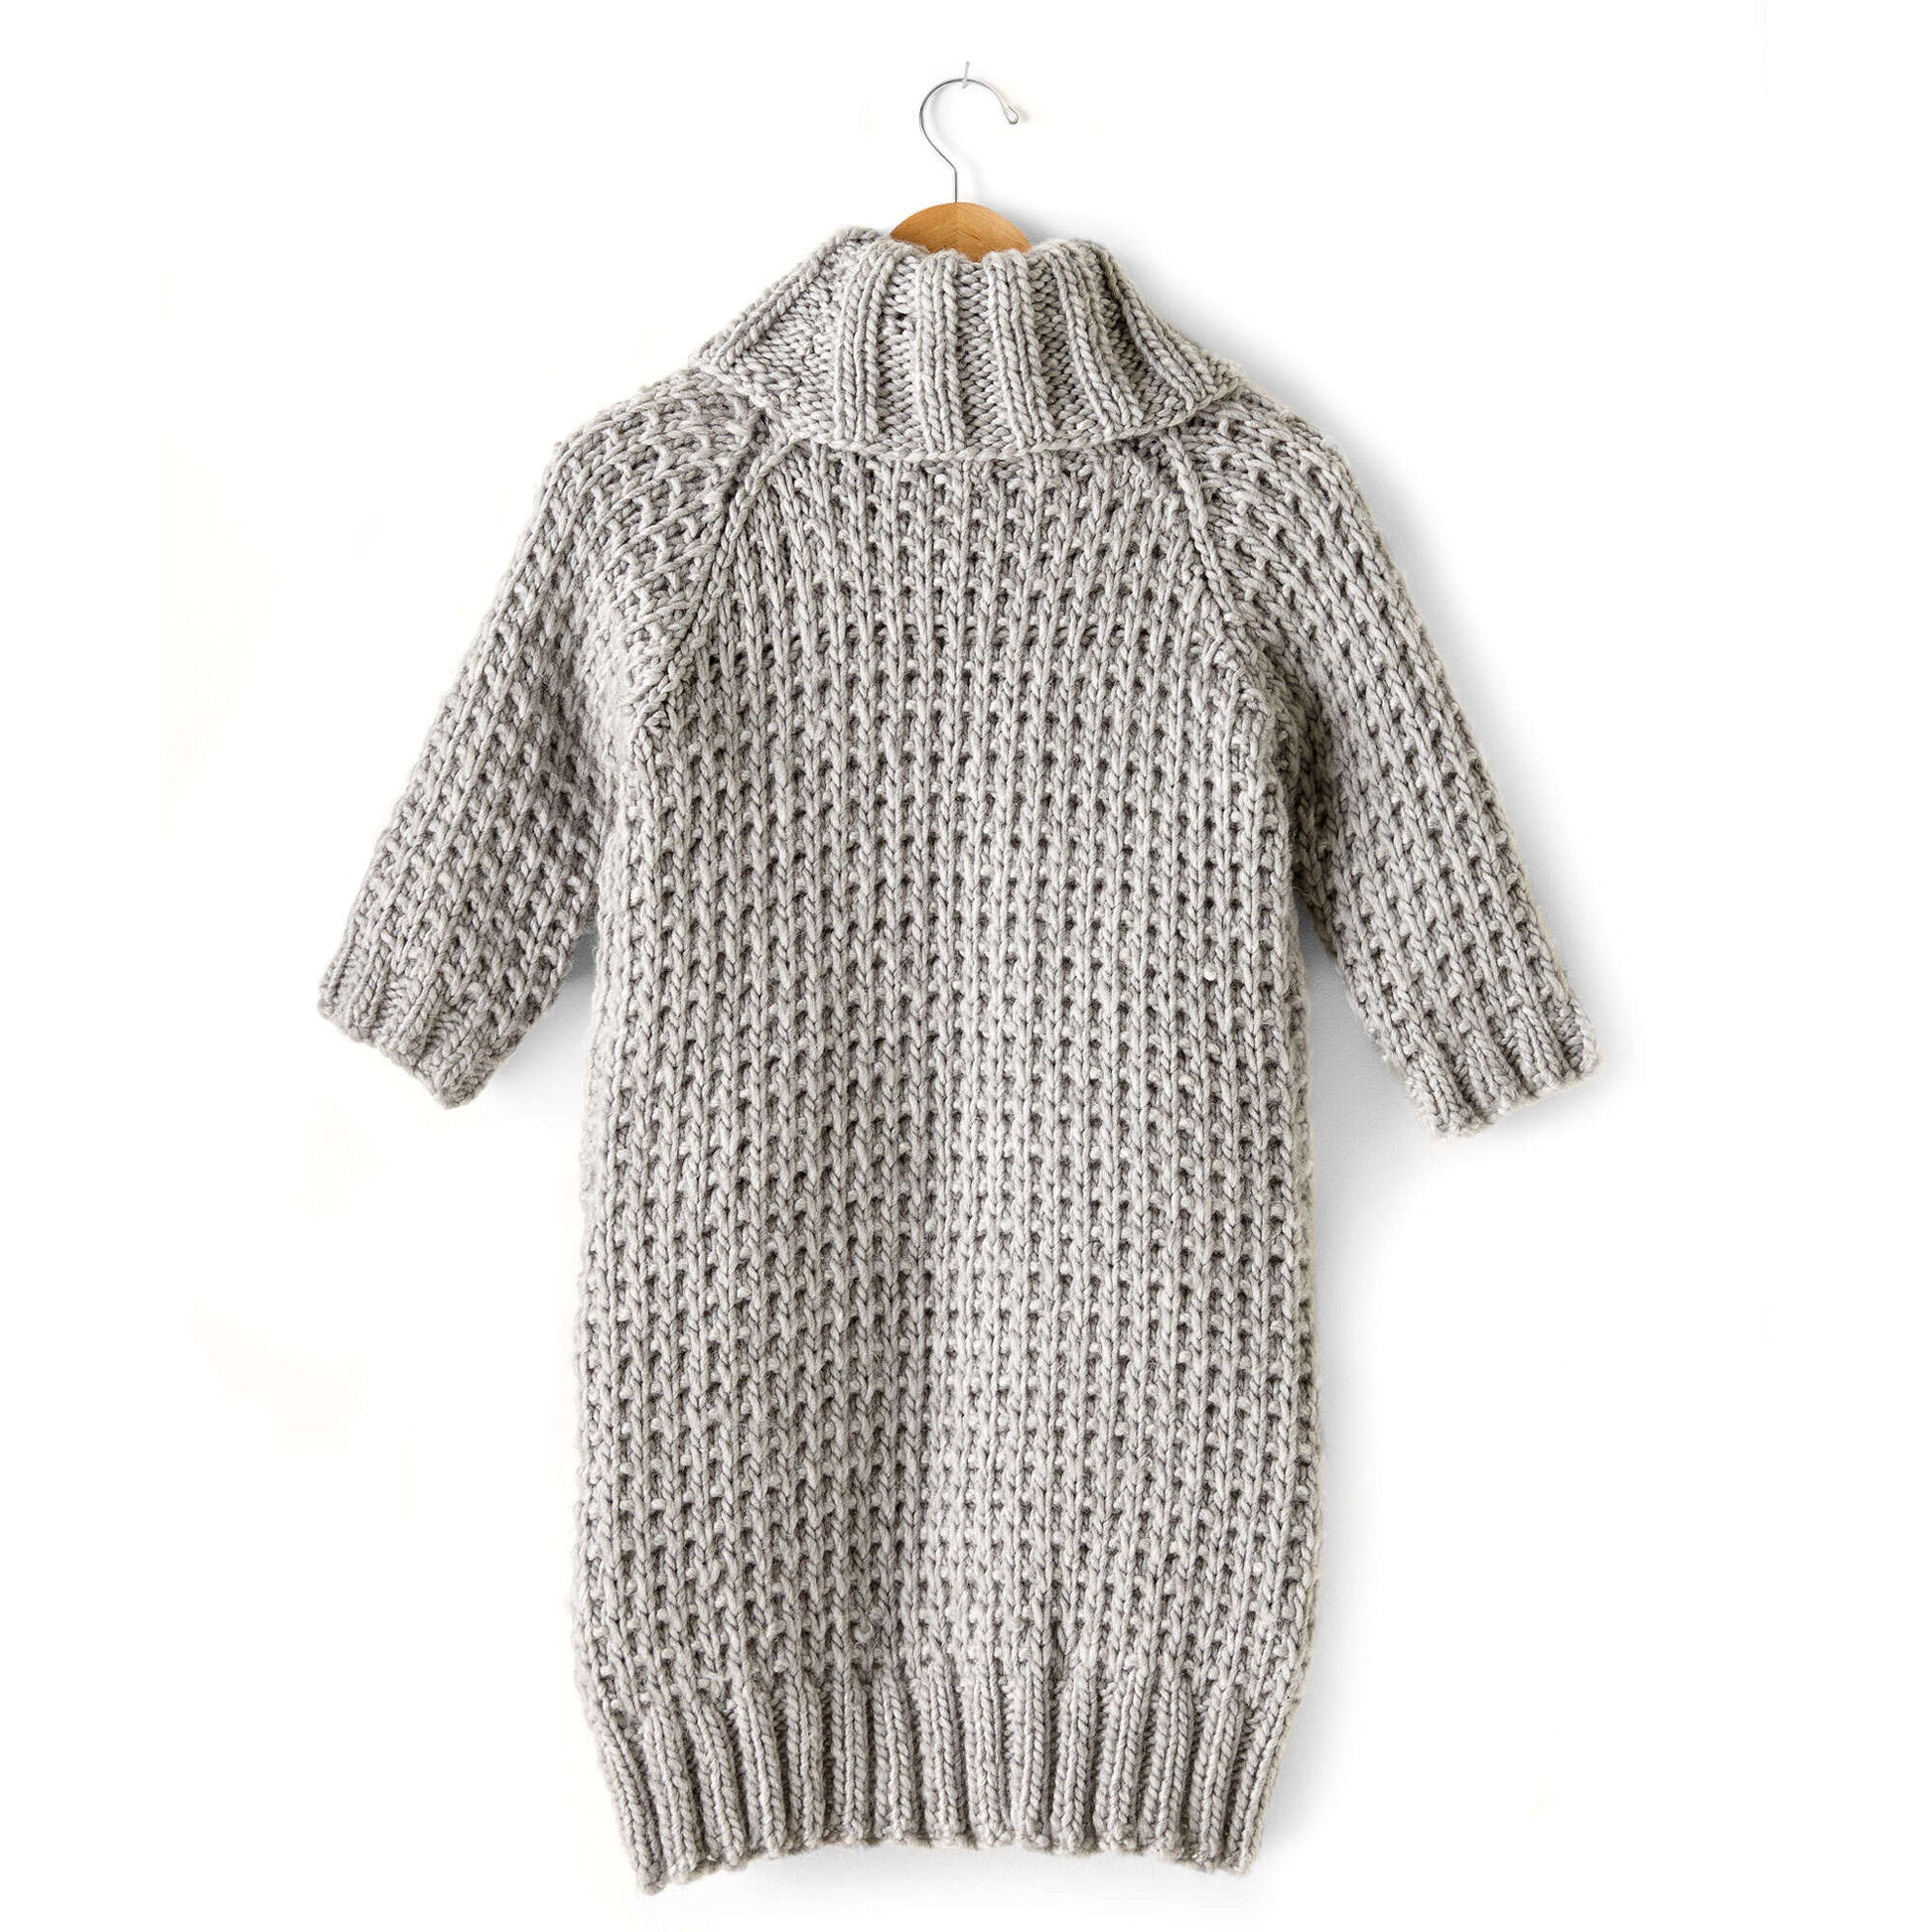 Free Bernat Knit Slouchy Sweater Dress Pattern